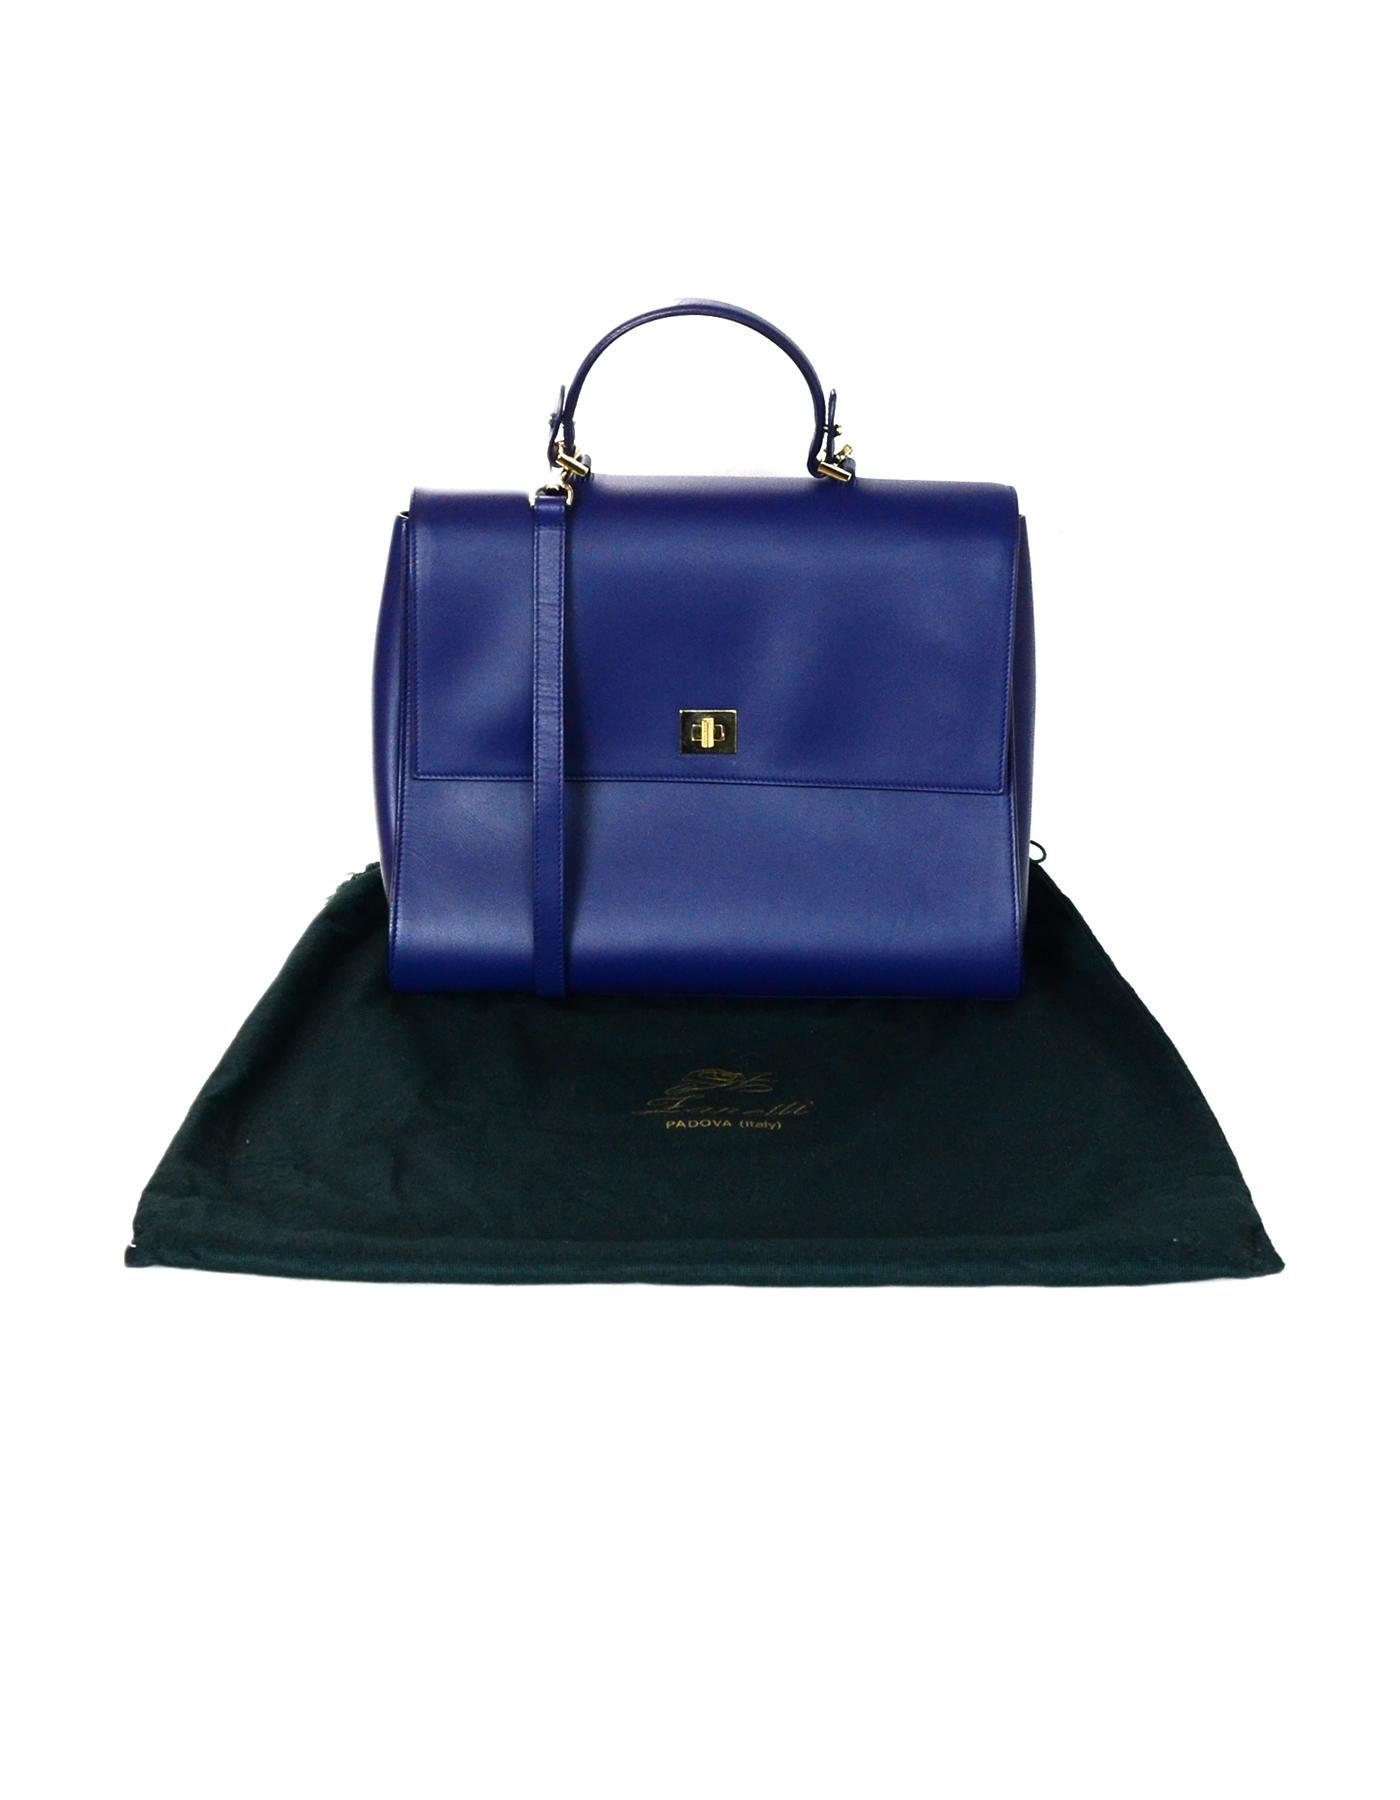 Hugo Boss Blue Leather Bespoke S Top Handle Satchel Bag 5